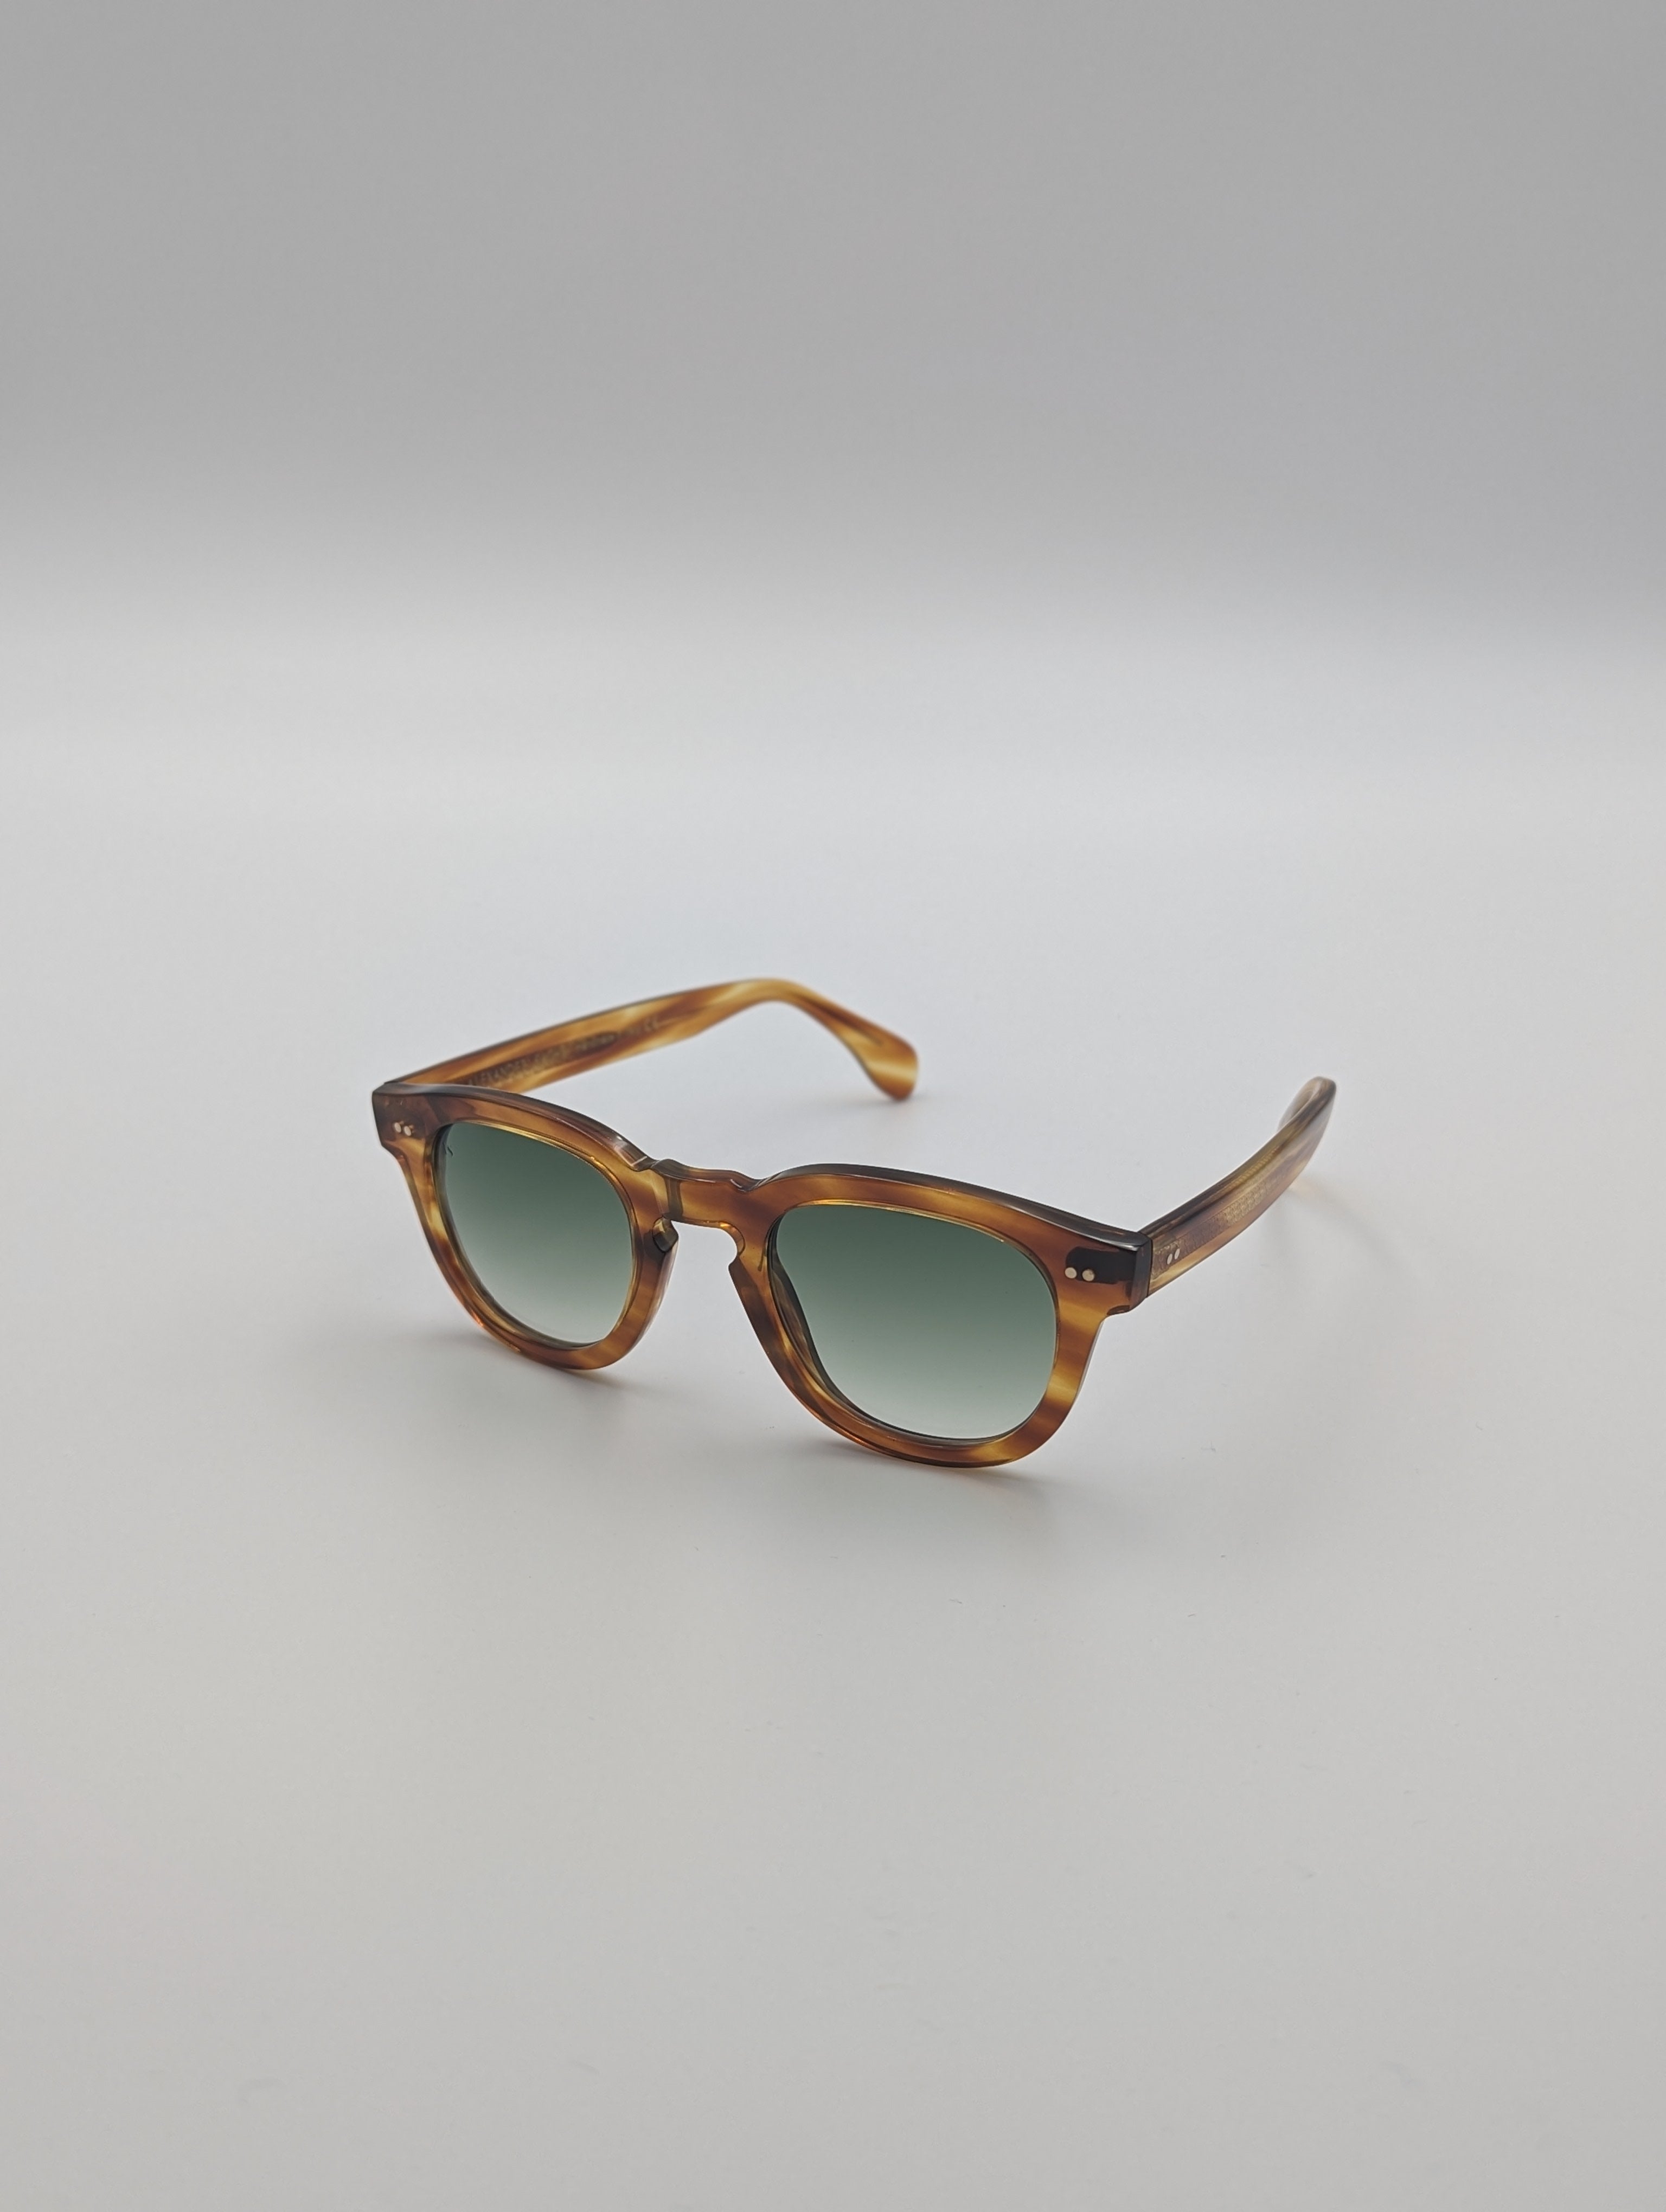 Sunglasses Lmtd Tortoiseshell - Caramel